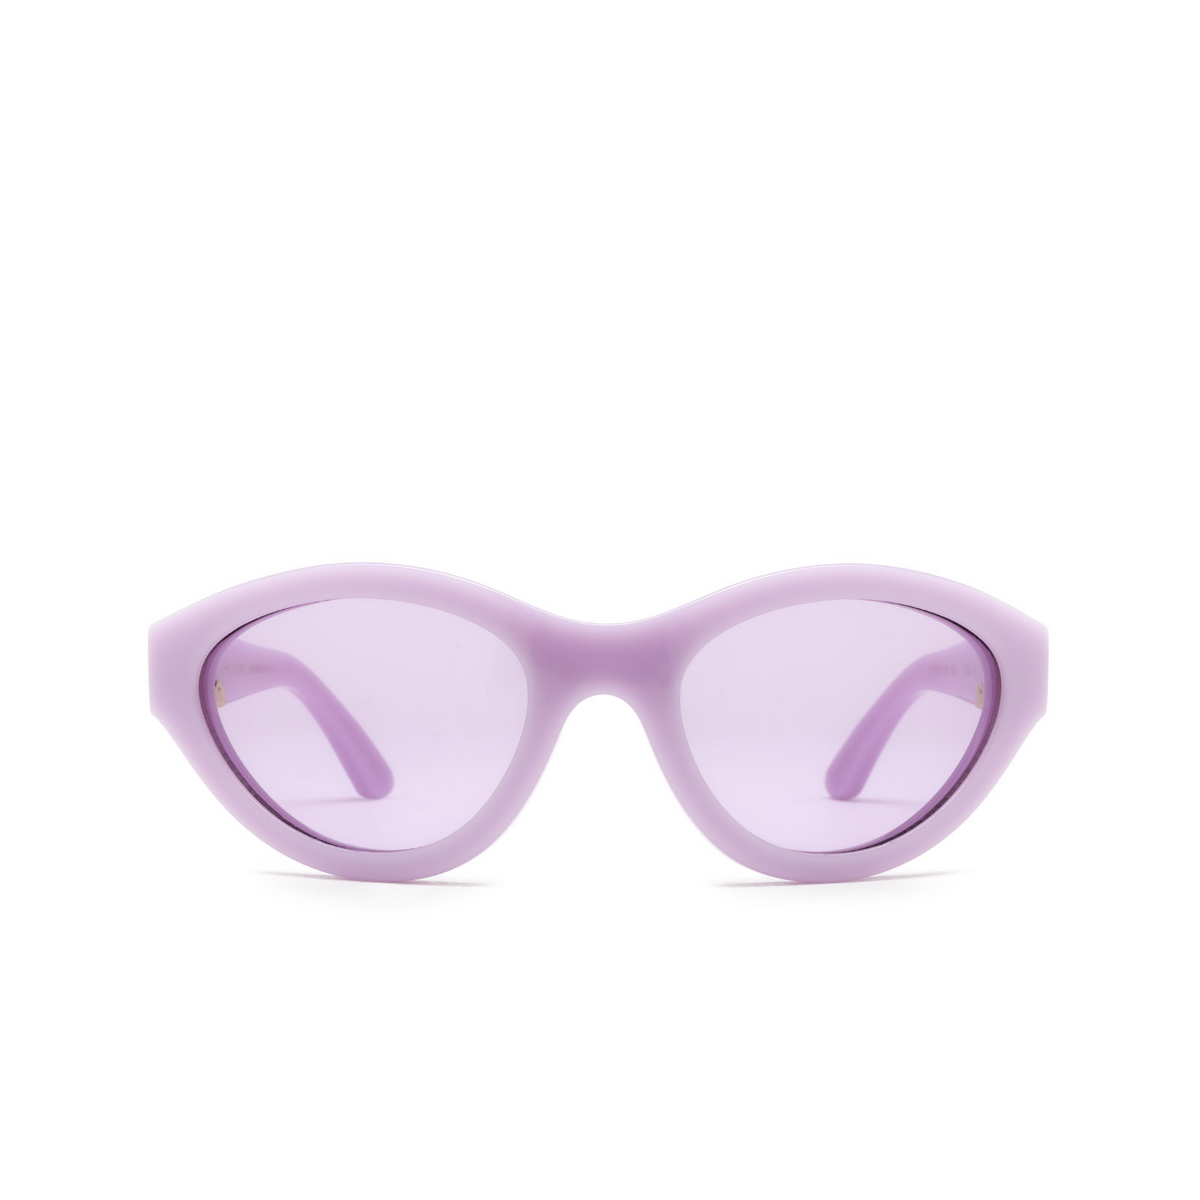 Huma® Mask Sunglasses: Linda color Violet 10 - front view.